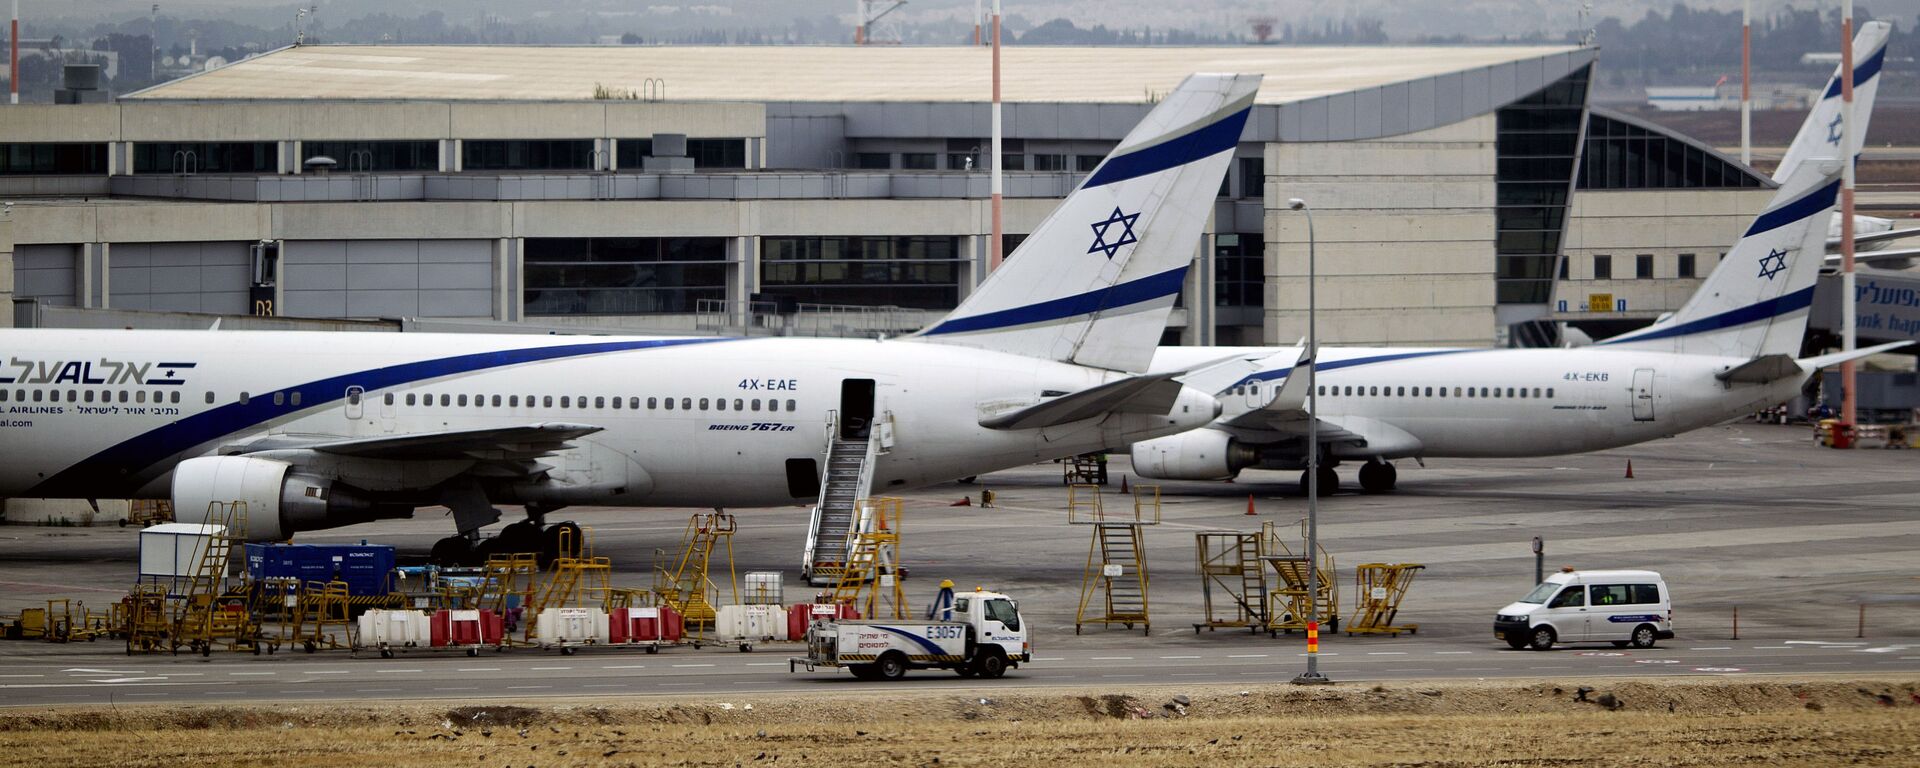 مطار بن غوريون الدولي في تل أبيب، إسرائيل 21 أبريل/ نيسان 2013 - سبوتنيك عربي, 1920, 26.05.2024